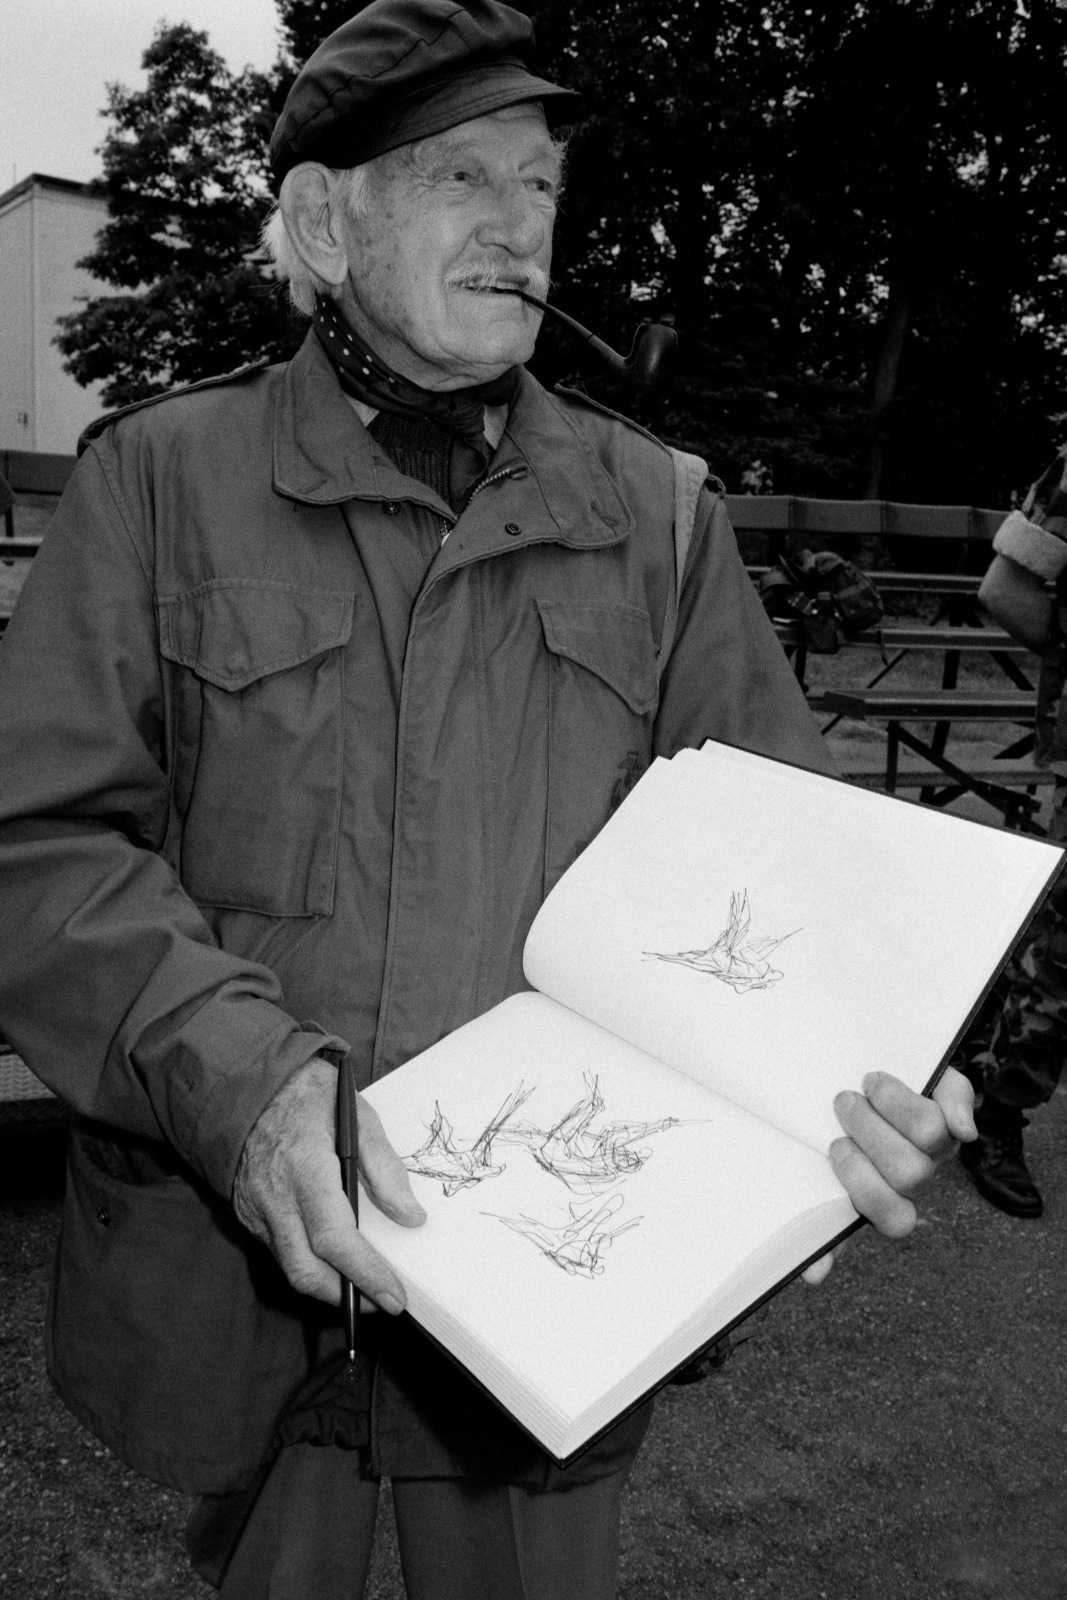 Combat artist John Groth sketches at Quantico military base.